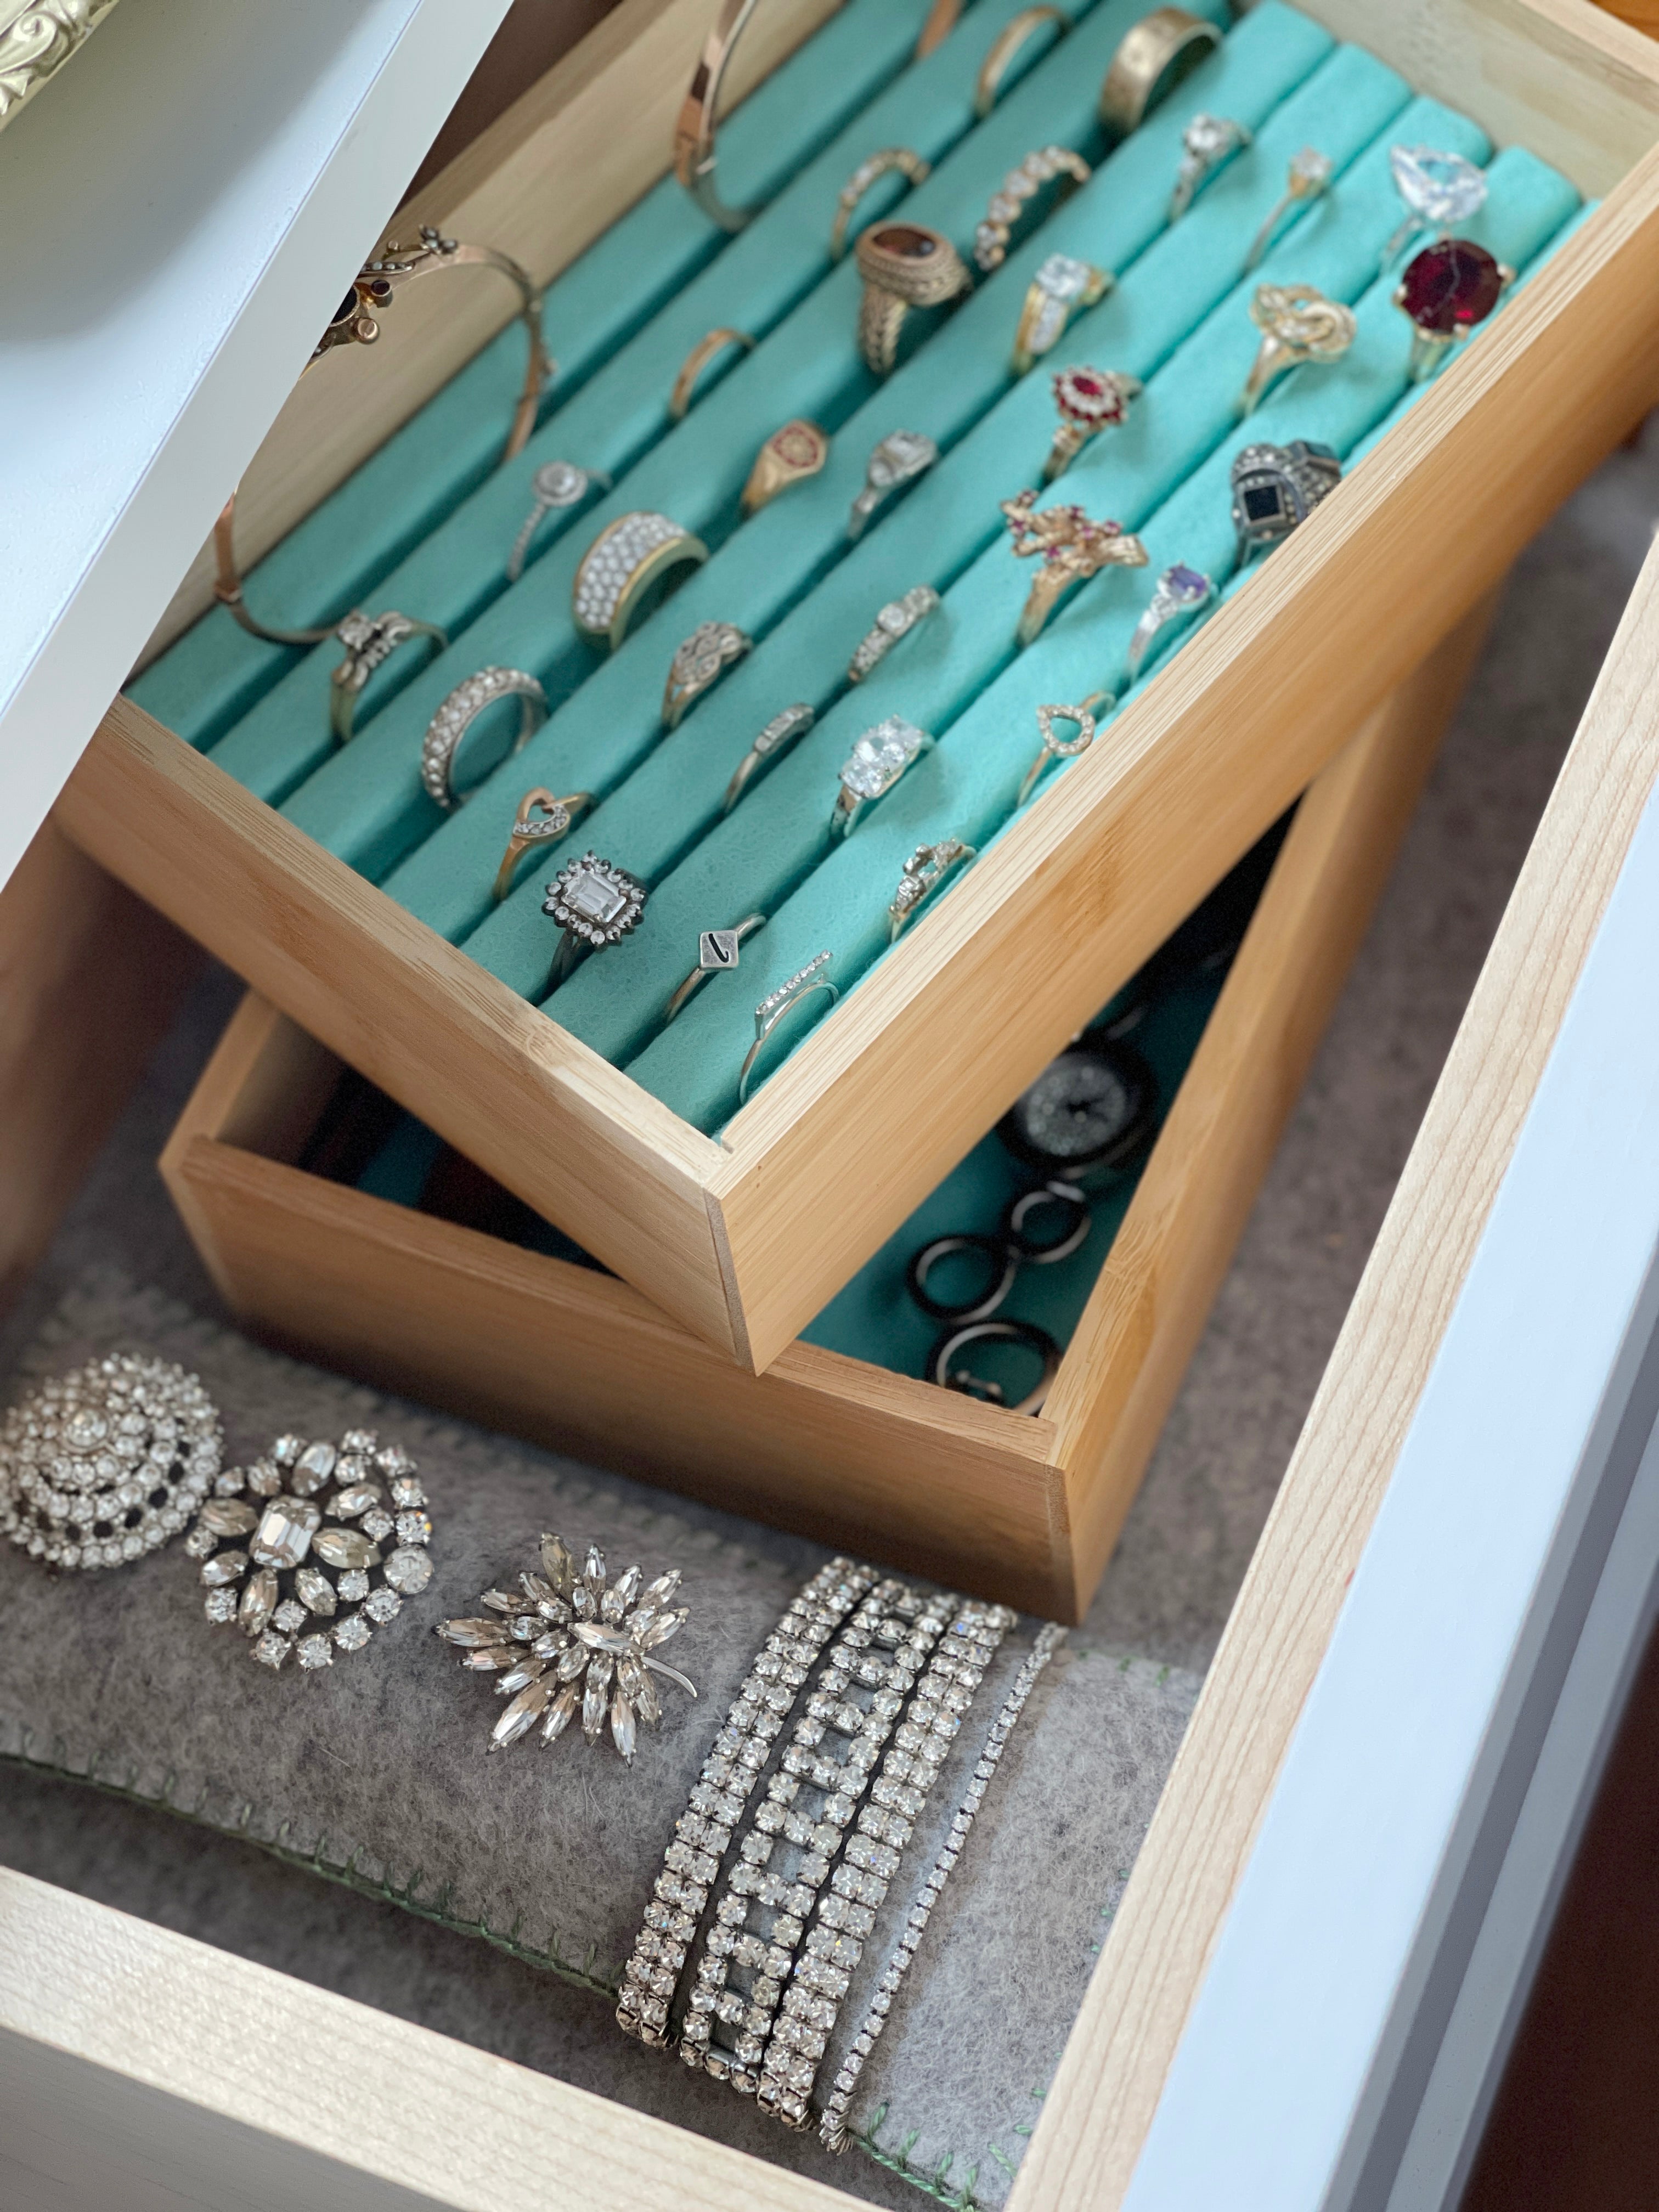 The Felt Store Pretty DIY Wool Felt Jewellery Box Organizers by Make & Merry Co